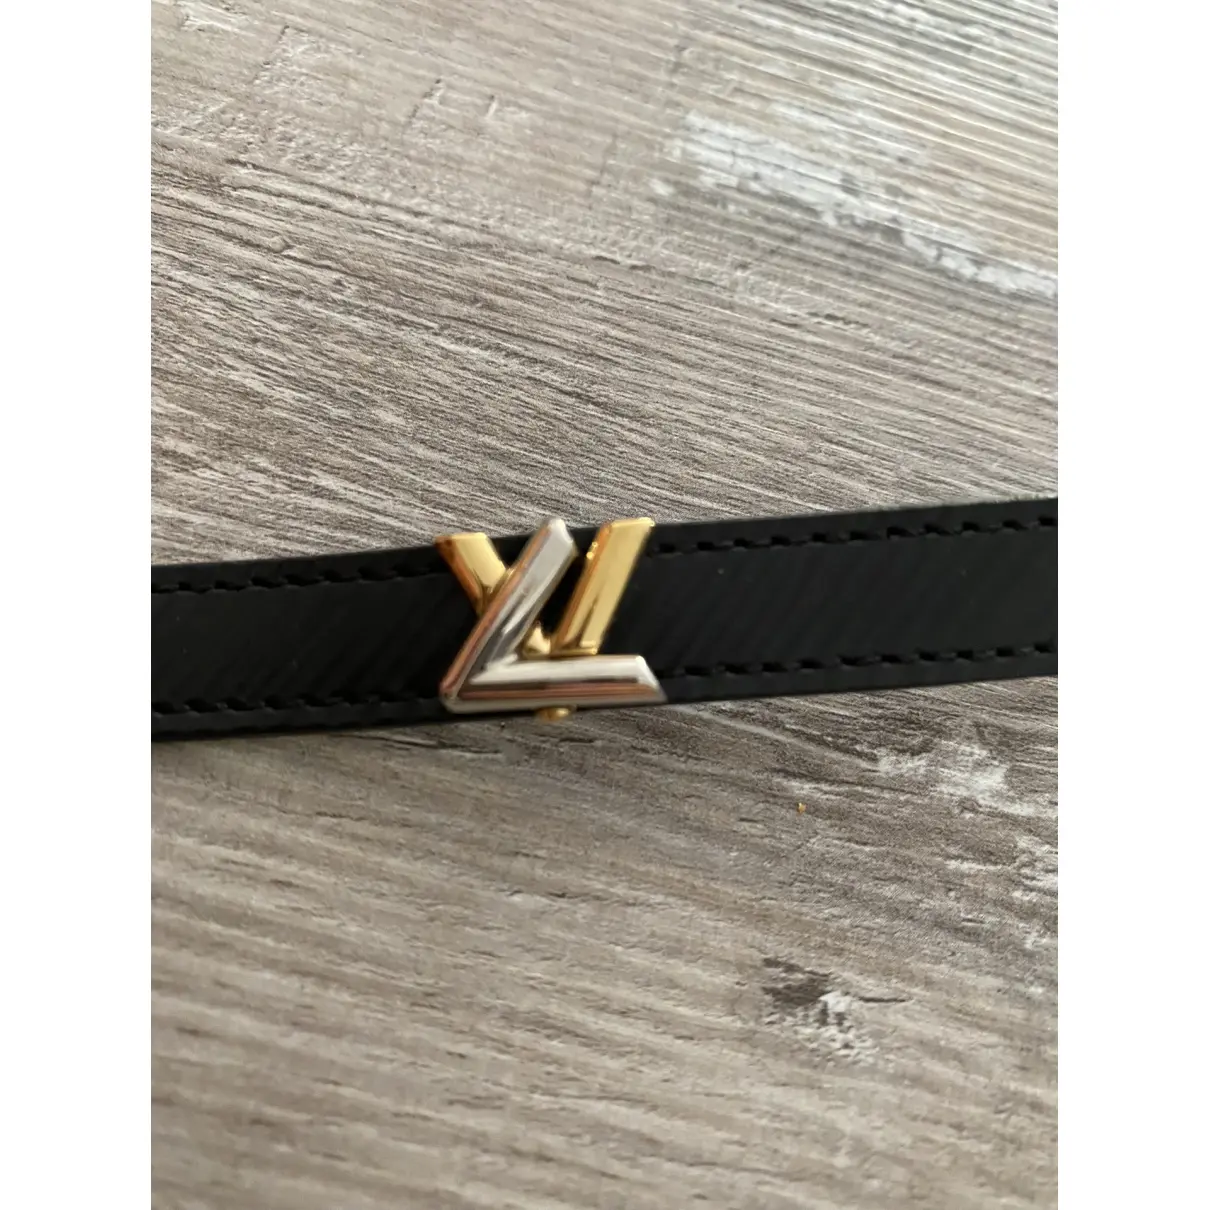 Buy Louis Vuitton Twist leather bracelet online